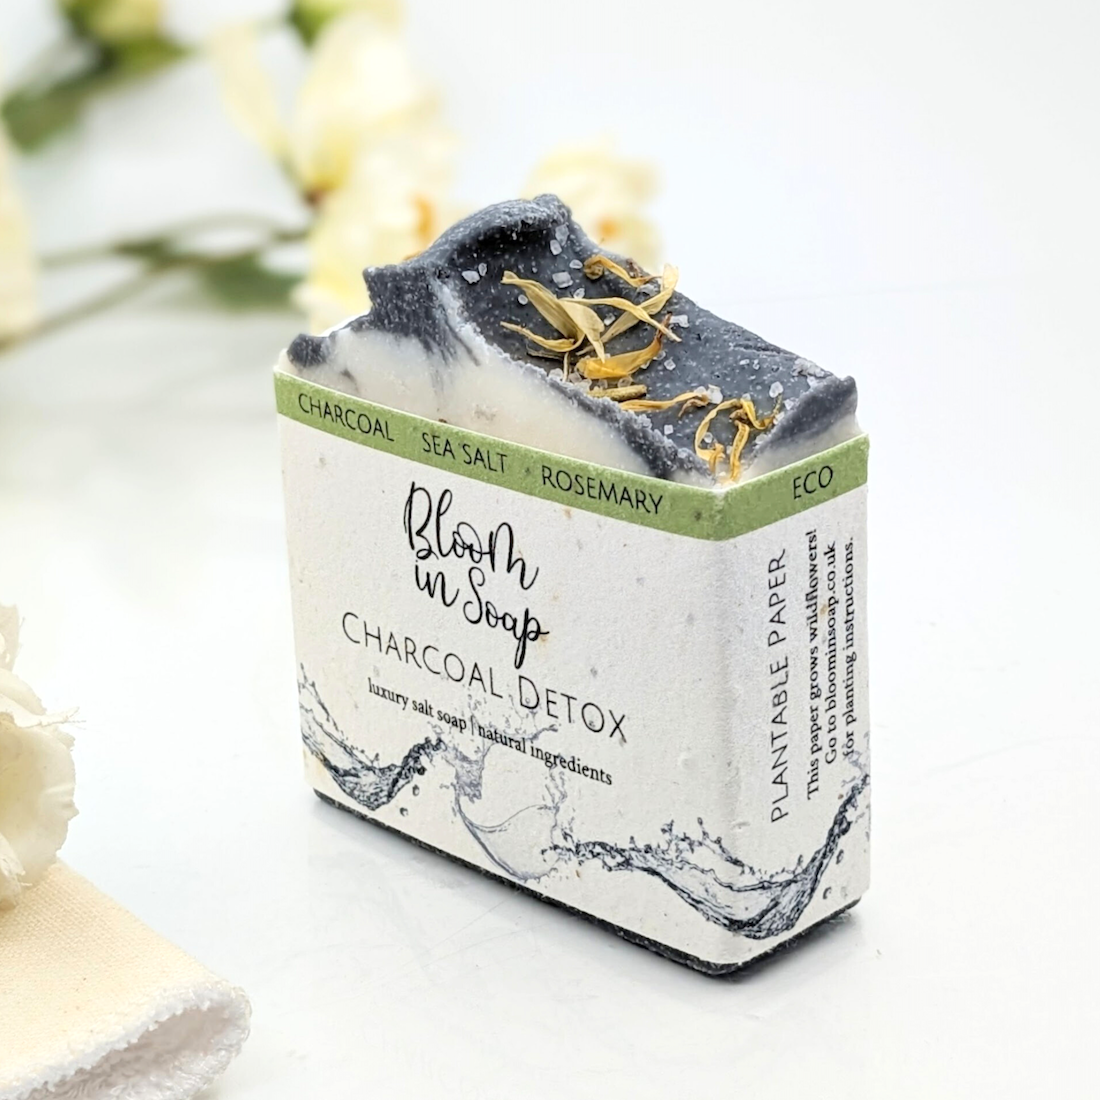 Charcoal Detox salt soap from Bloom In Soap